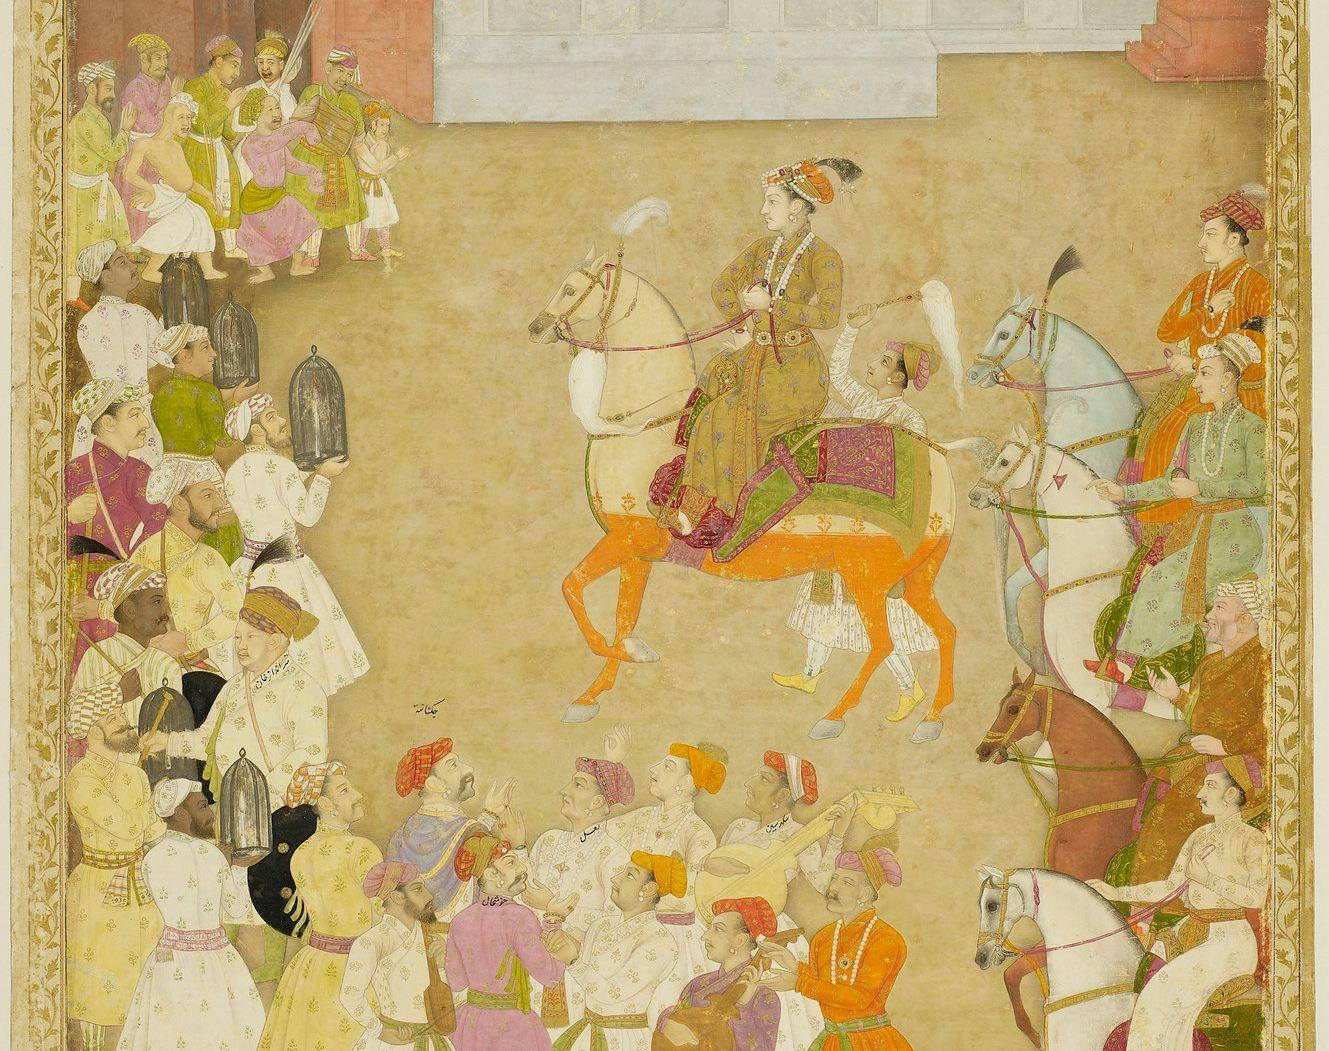 Wedding procession of Dara Shikoh, with Shah Shuja and Aurangzeb behind him